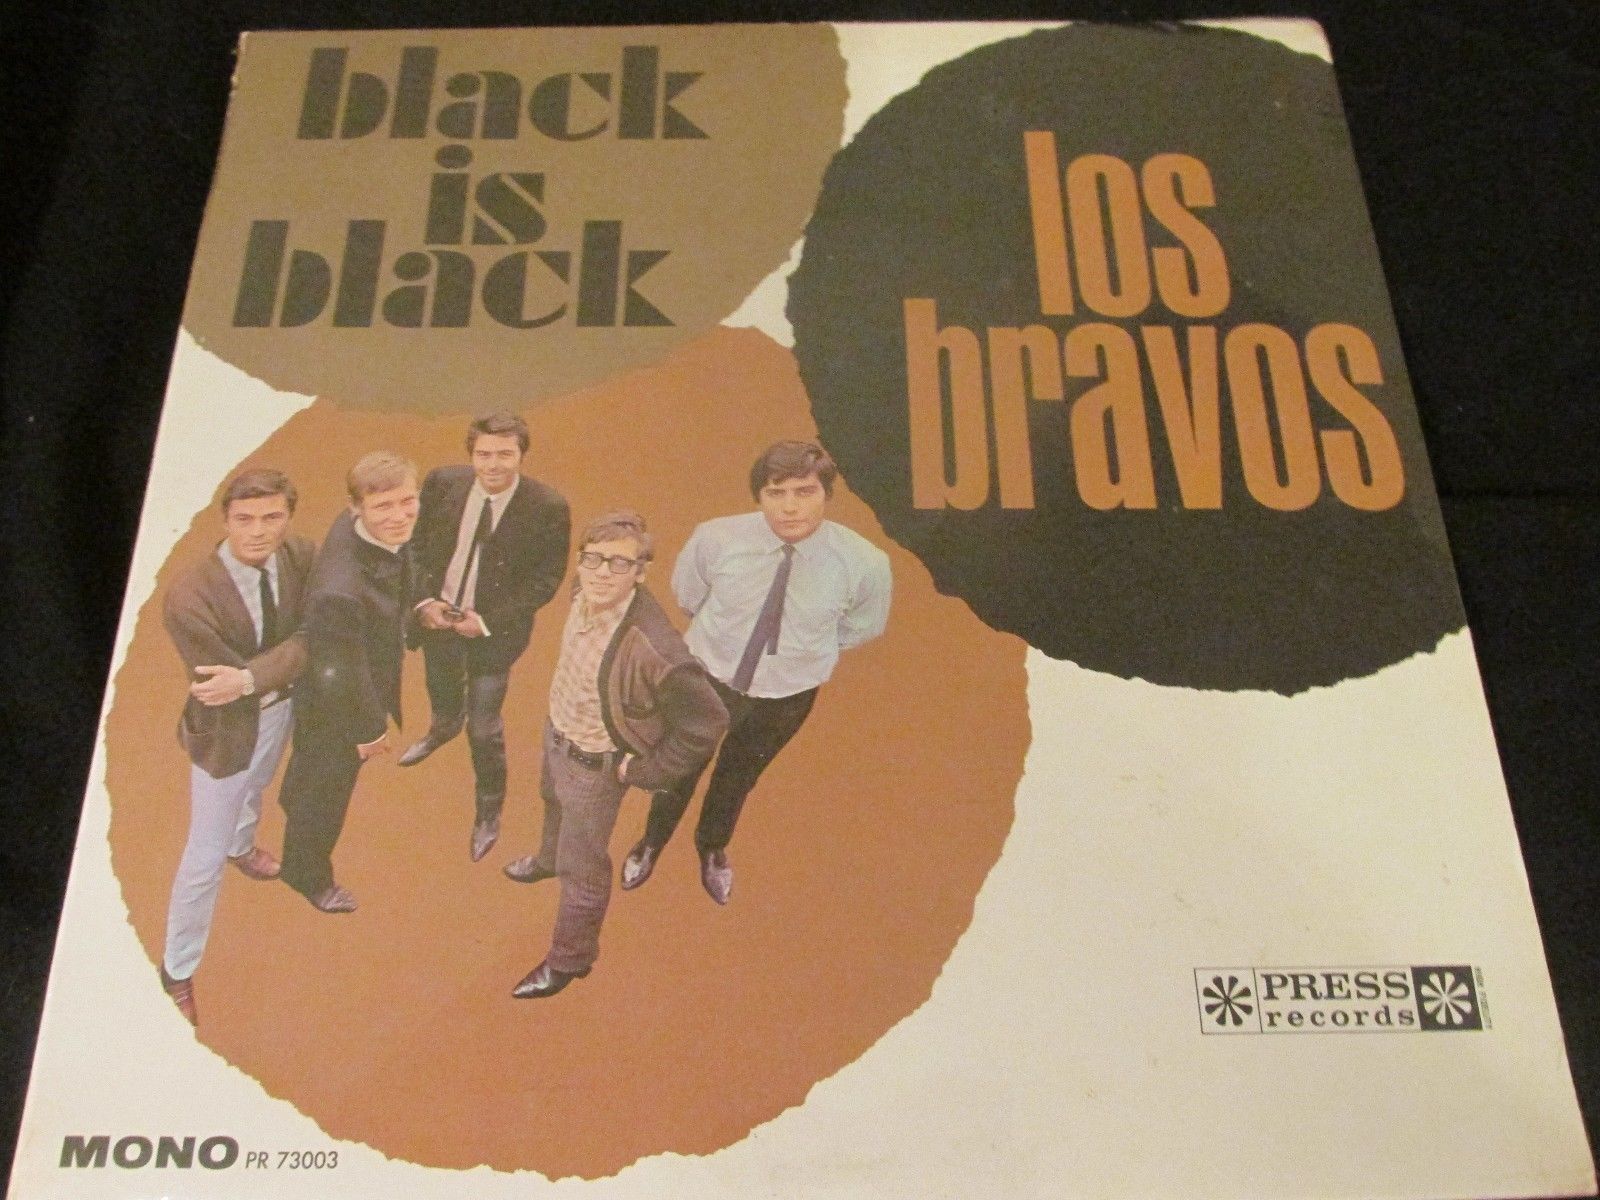 popsike.com - SEALED - Los Bravos - Black Is Black - Original Press Mono  Garage Rock - auction details